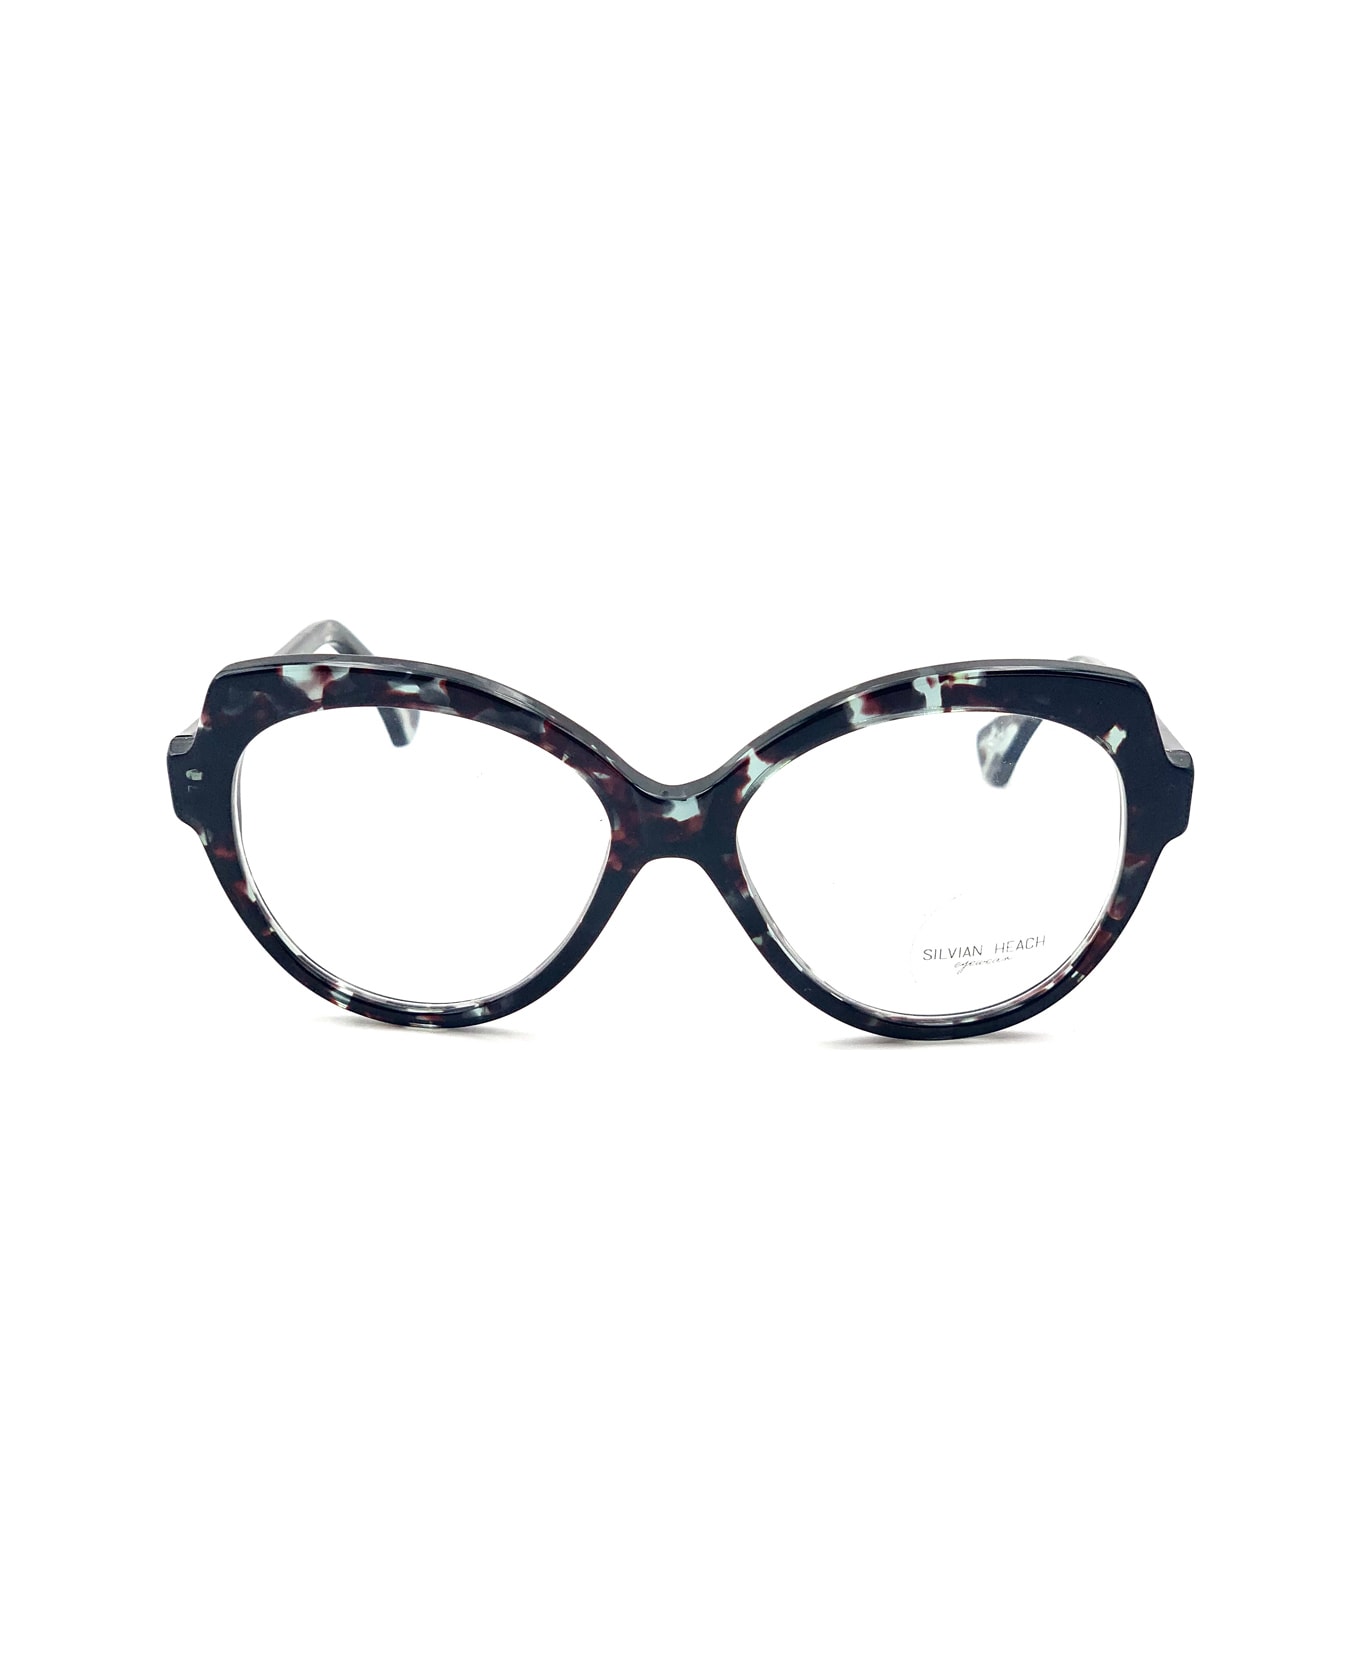 Silvian Heach Cosmopolitan Glasses - Nero アイウェア